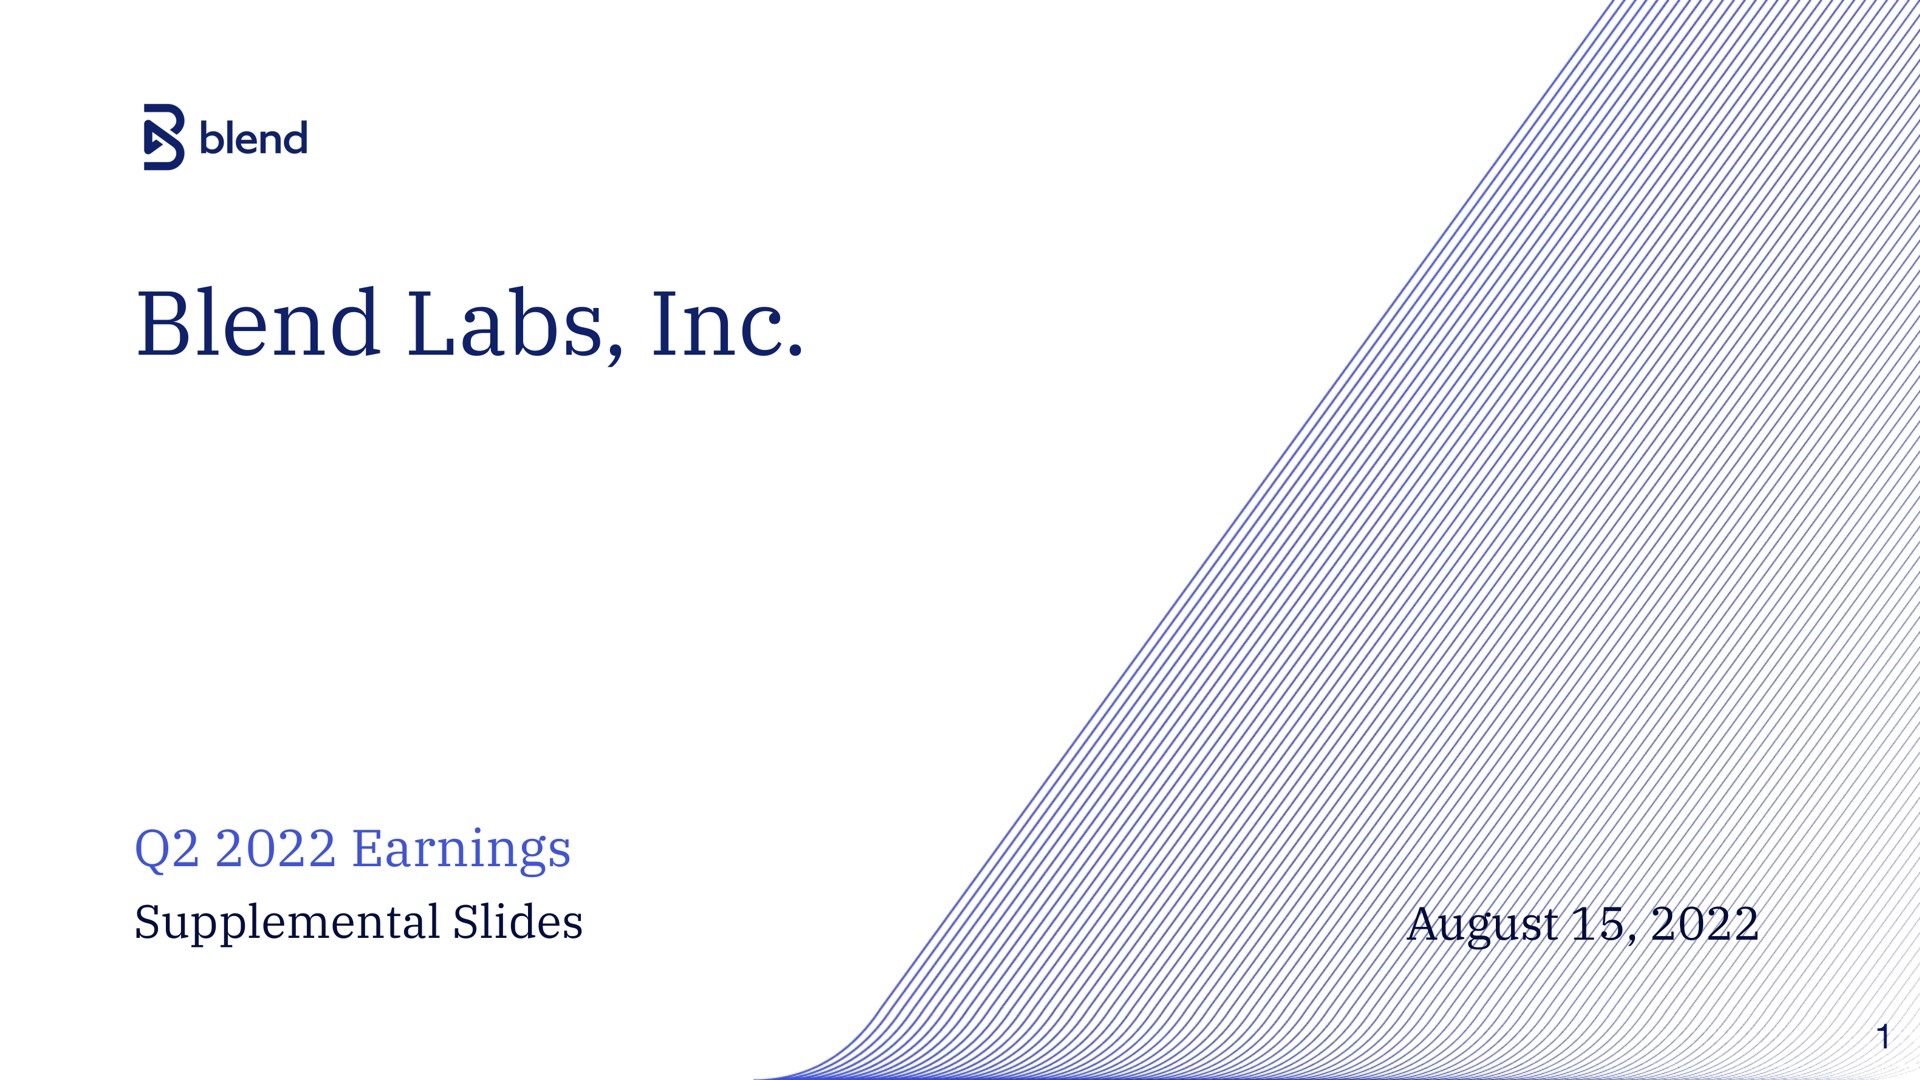 blend labs earnings supplemental slides august | Blend